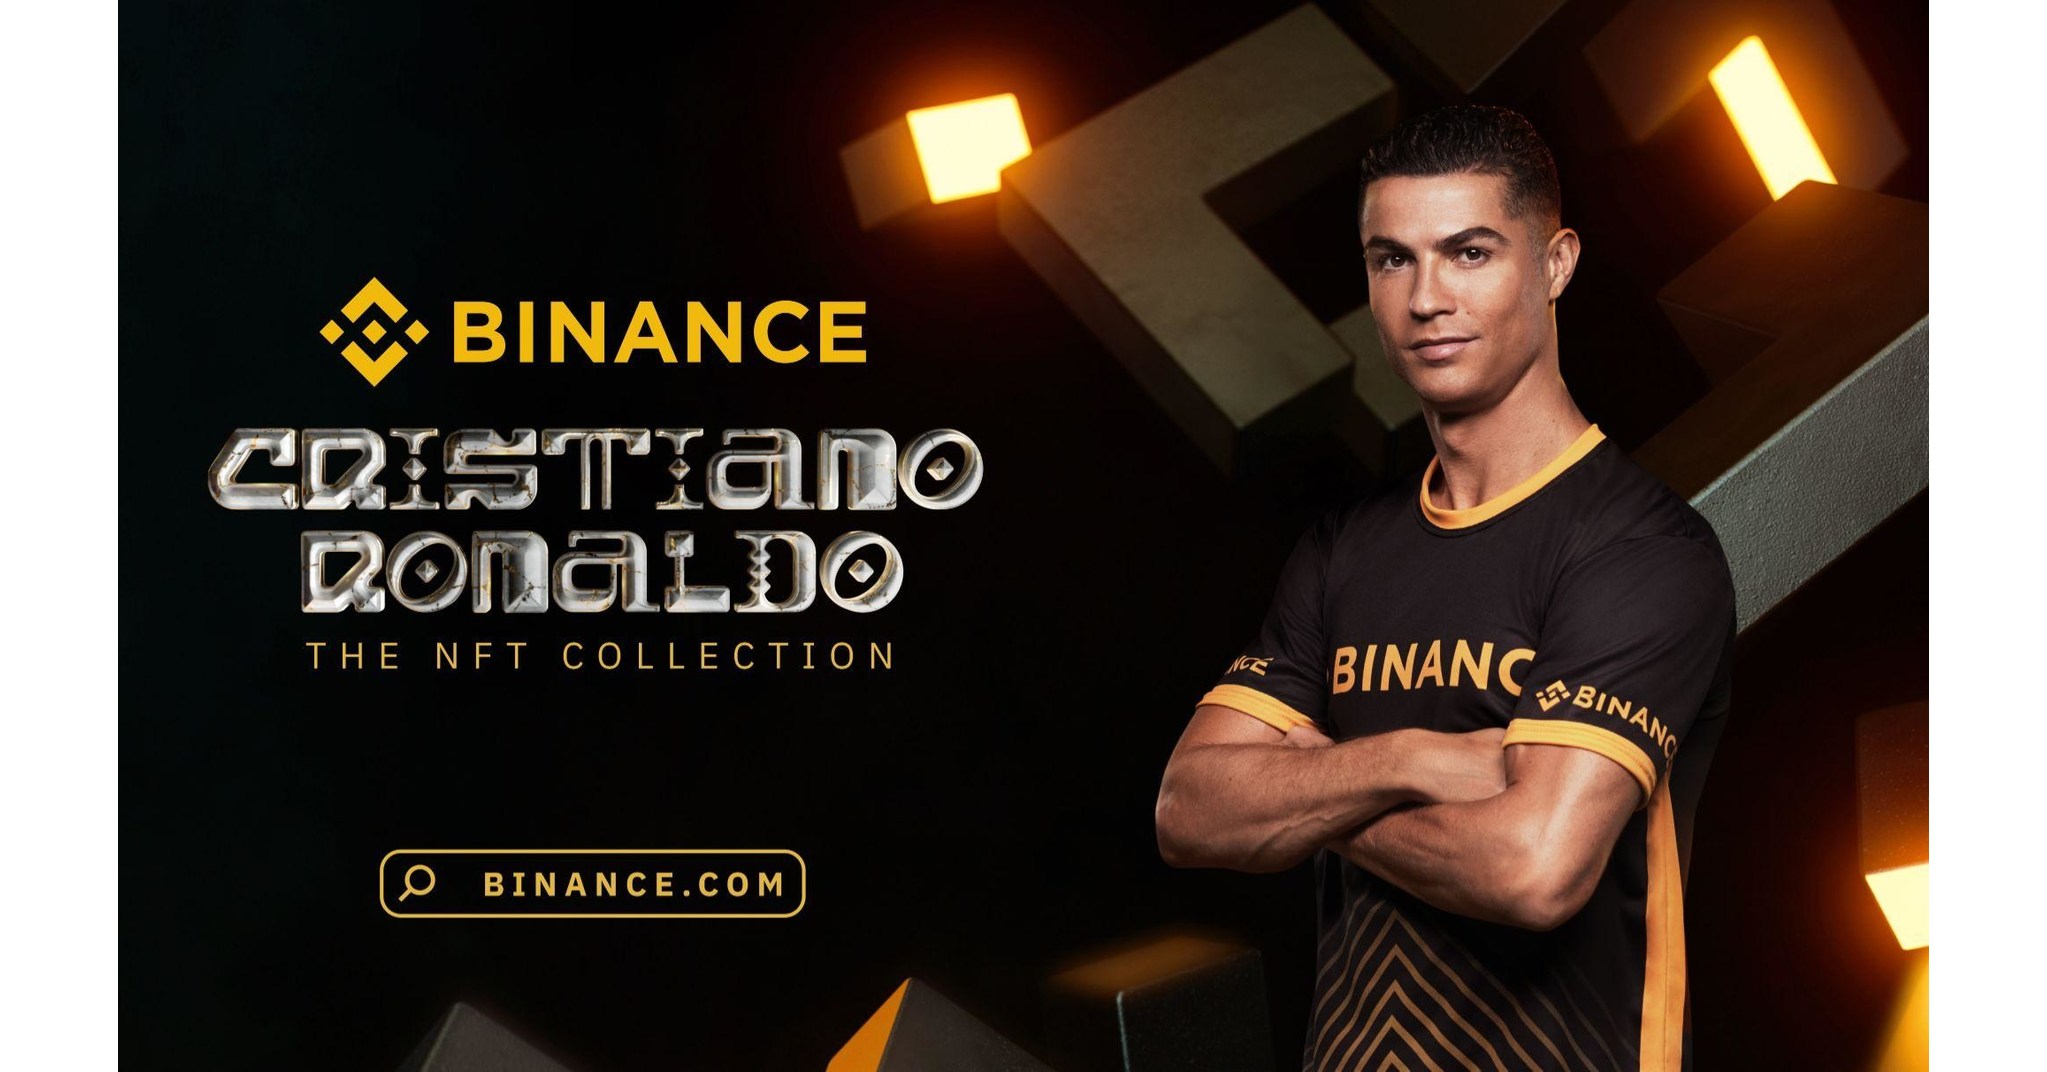 Cristiano Ronaldo NFT Binance CR7 Launch November 18 Details Price Auction Bidding